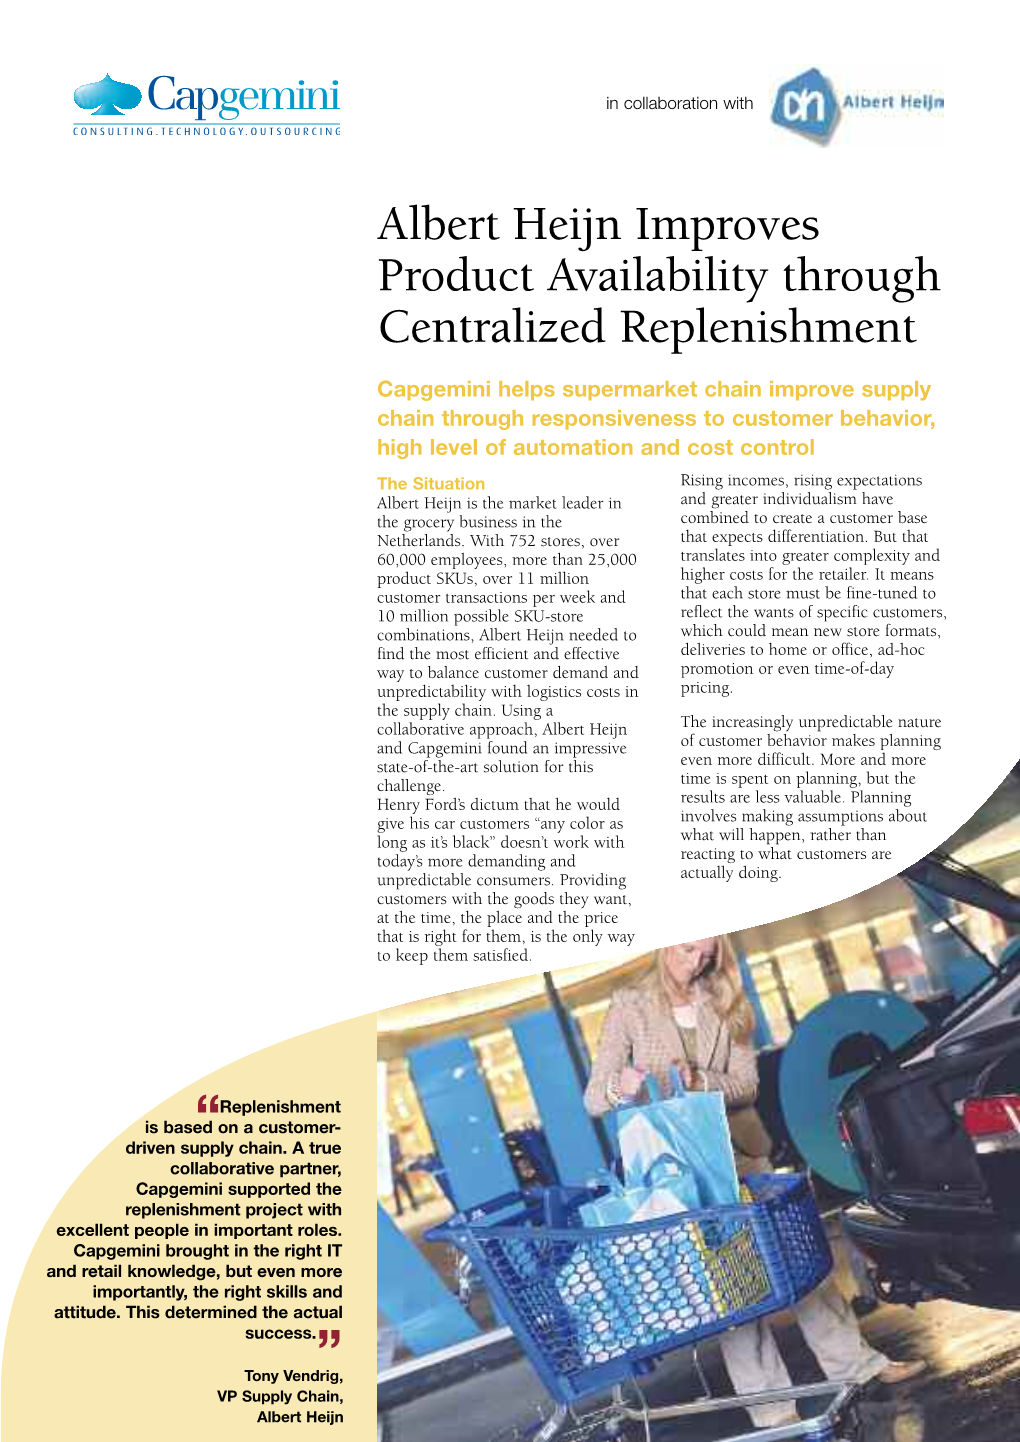 Albert Heijn Improves Product Availability Through Centralized Replenishment